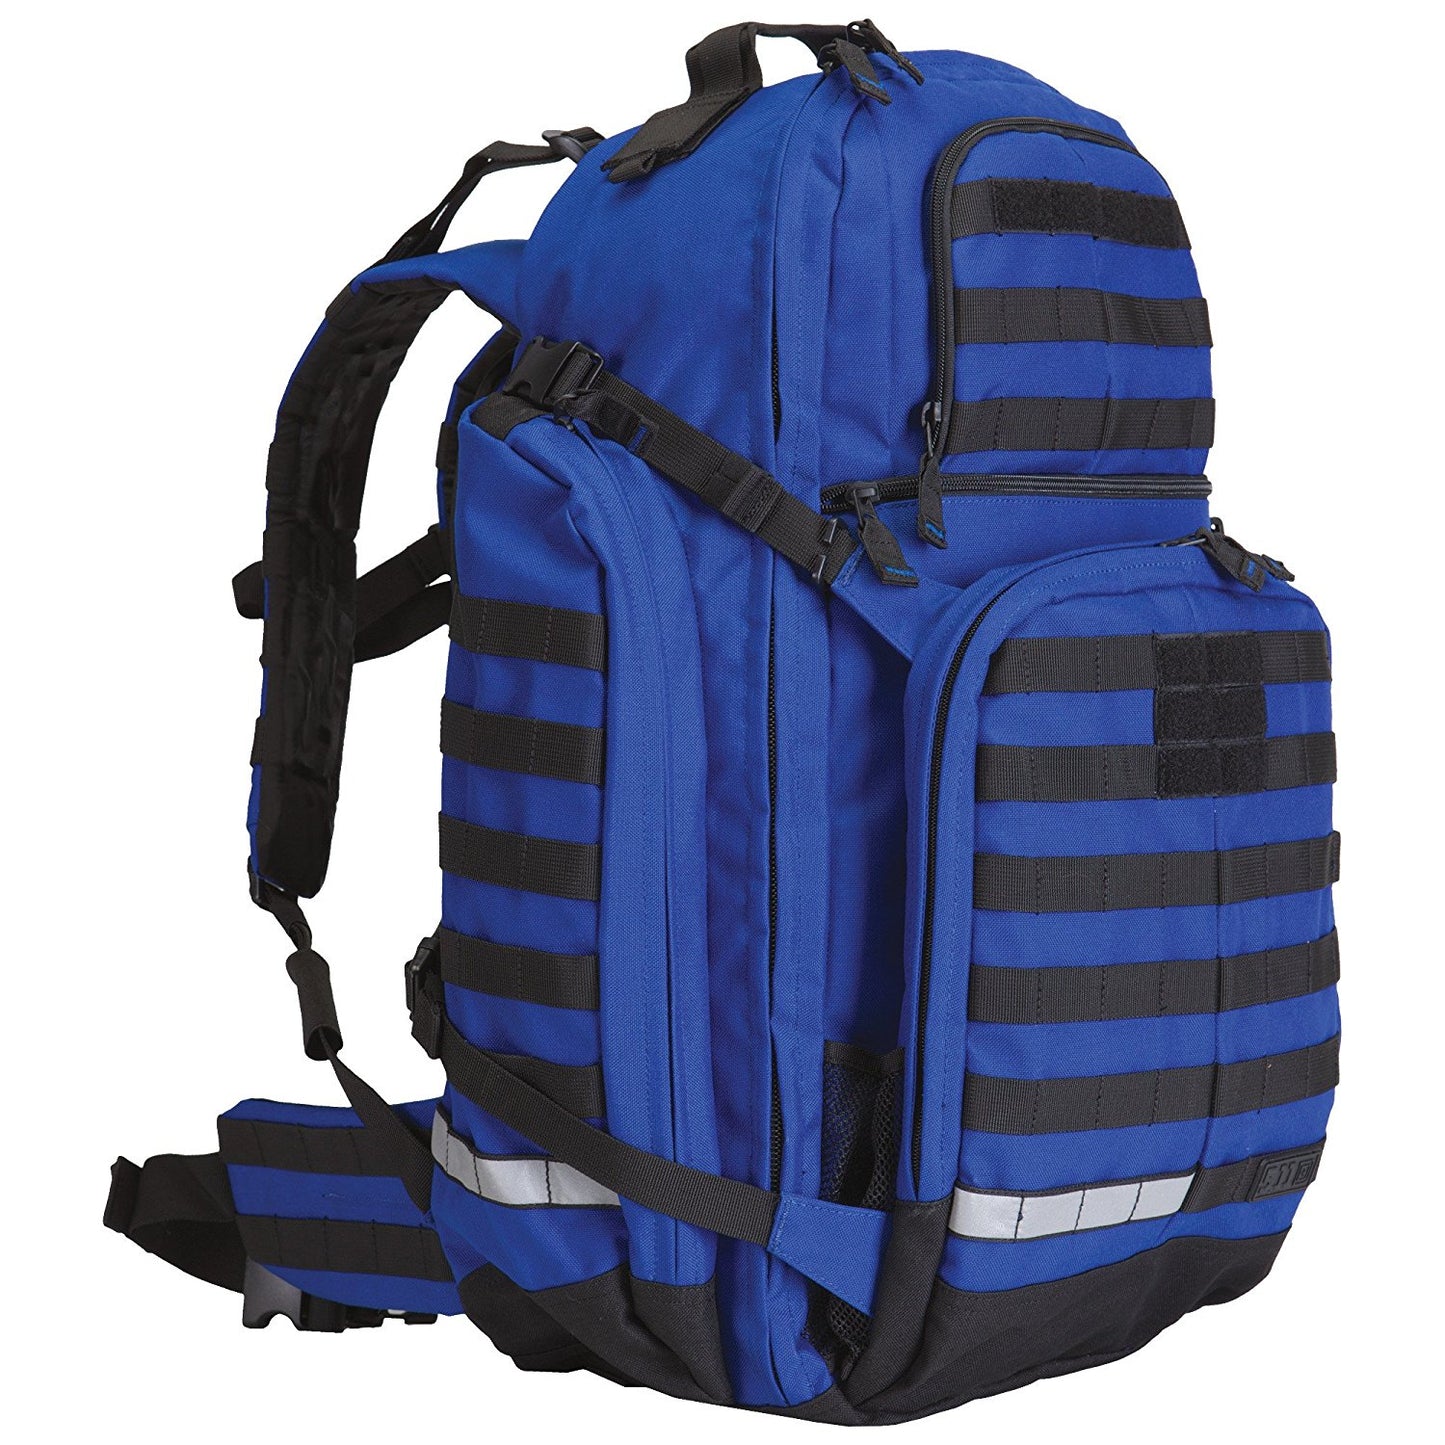 56936 - Responder 84 ALS Backpack 60L